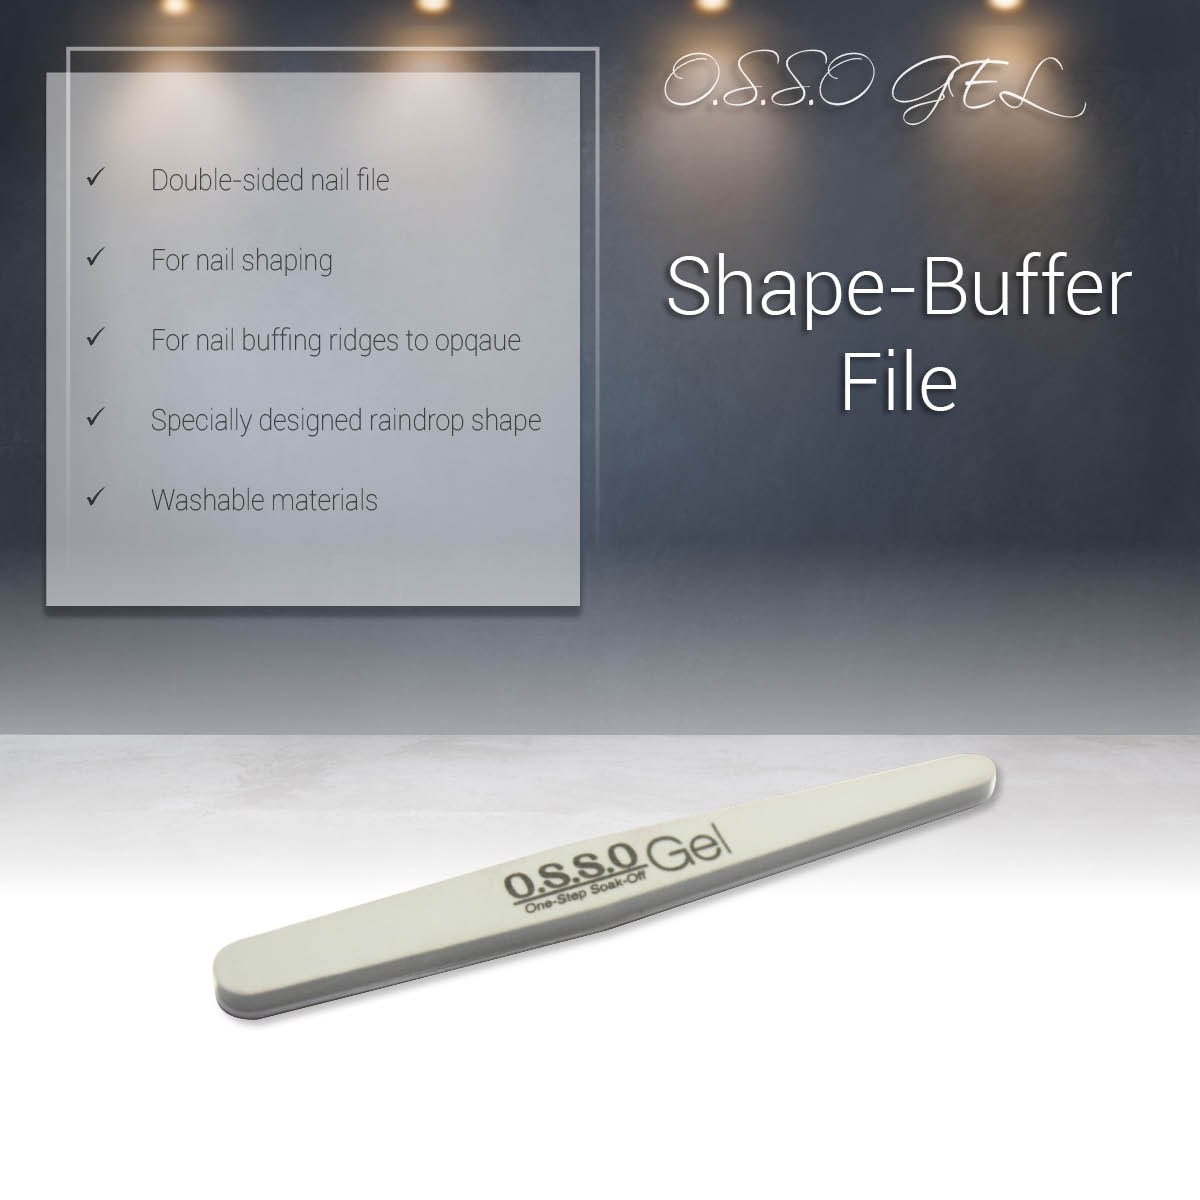 Shape-Buffer File